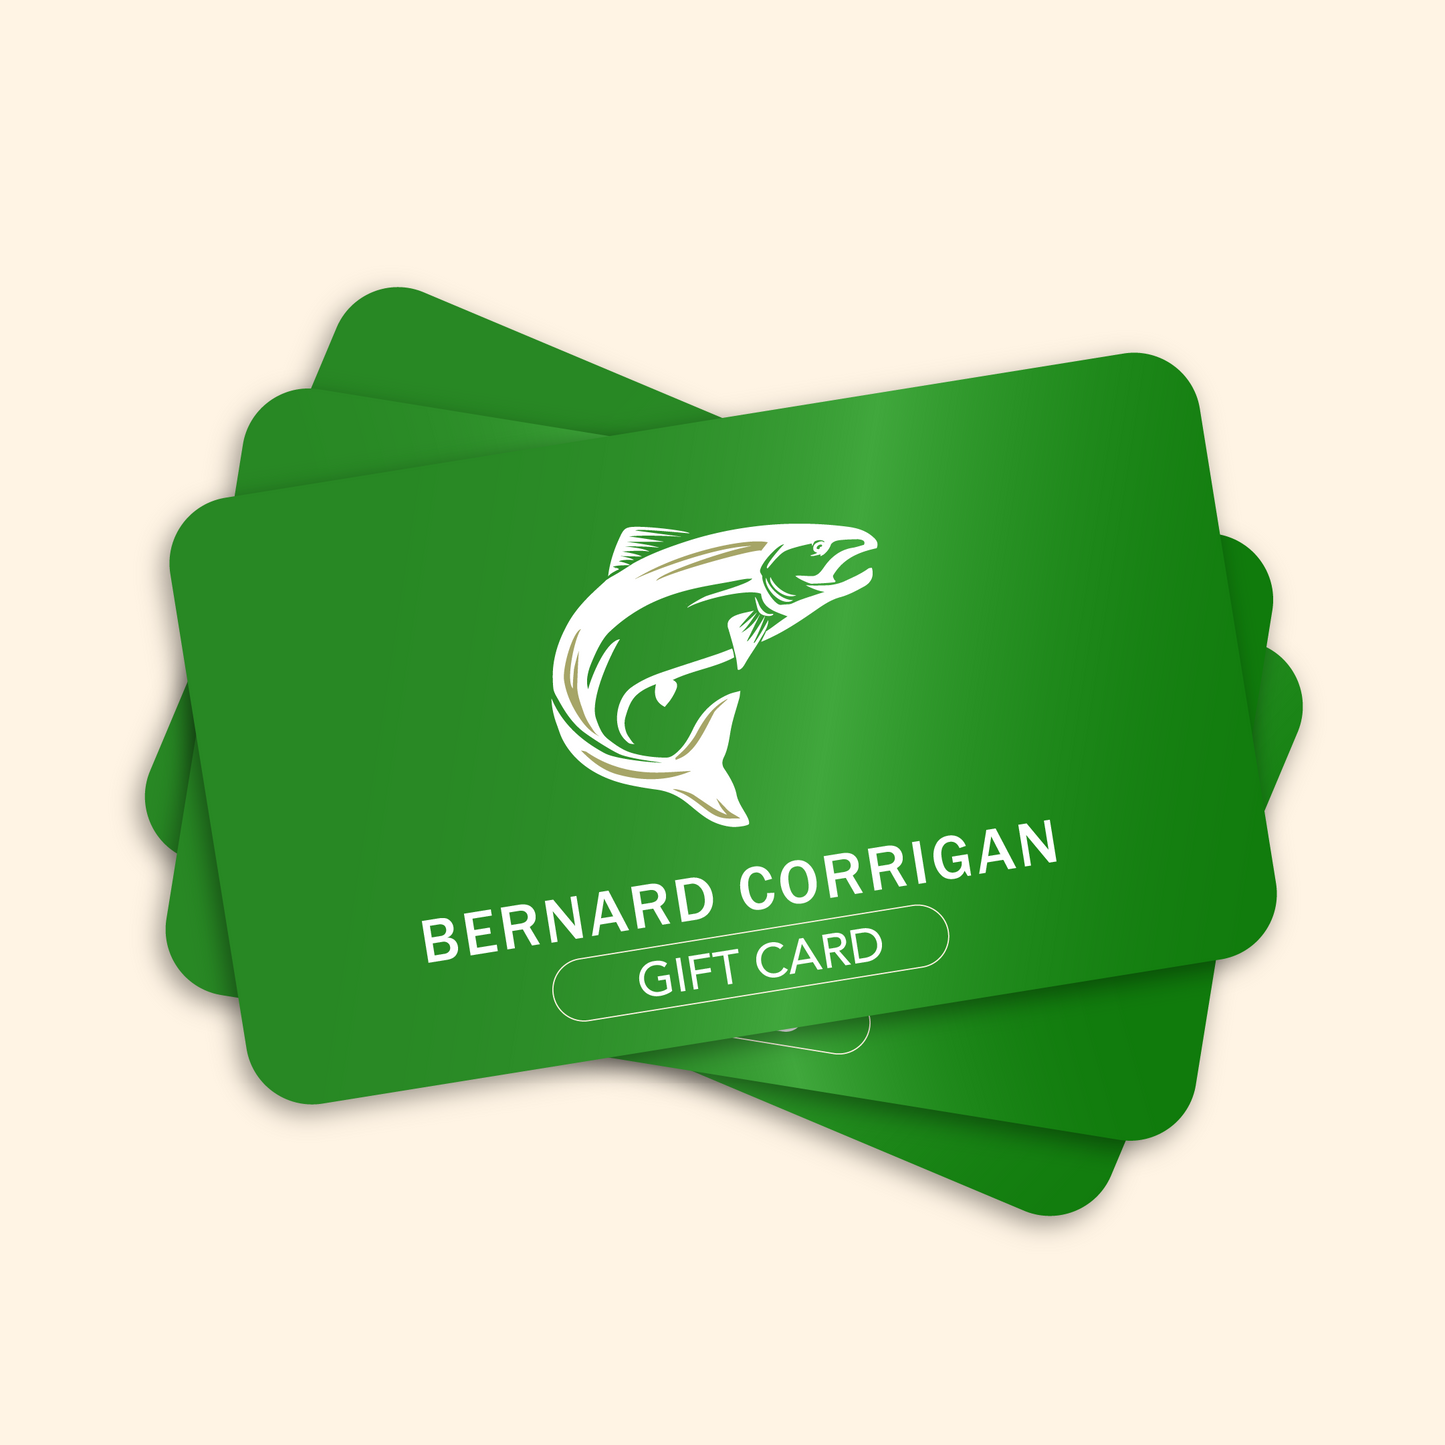 Bernard Corrigan Gift Card